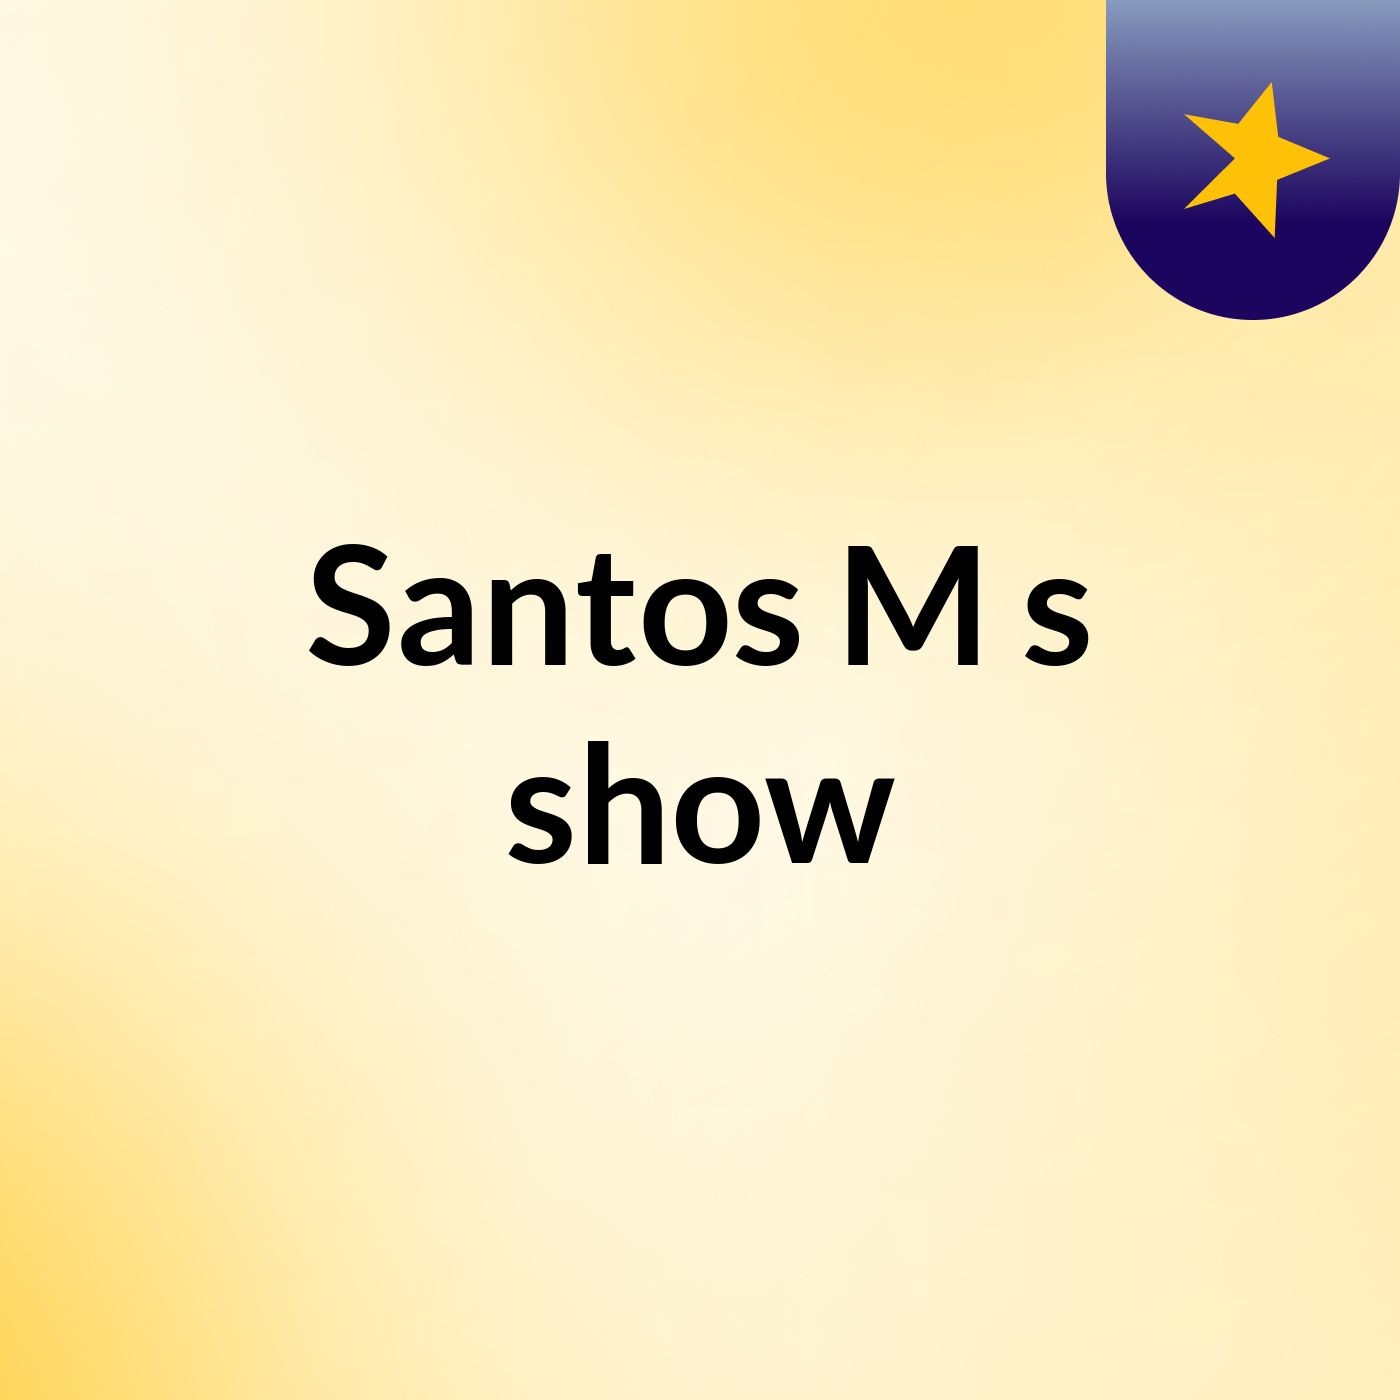 Santos M's show